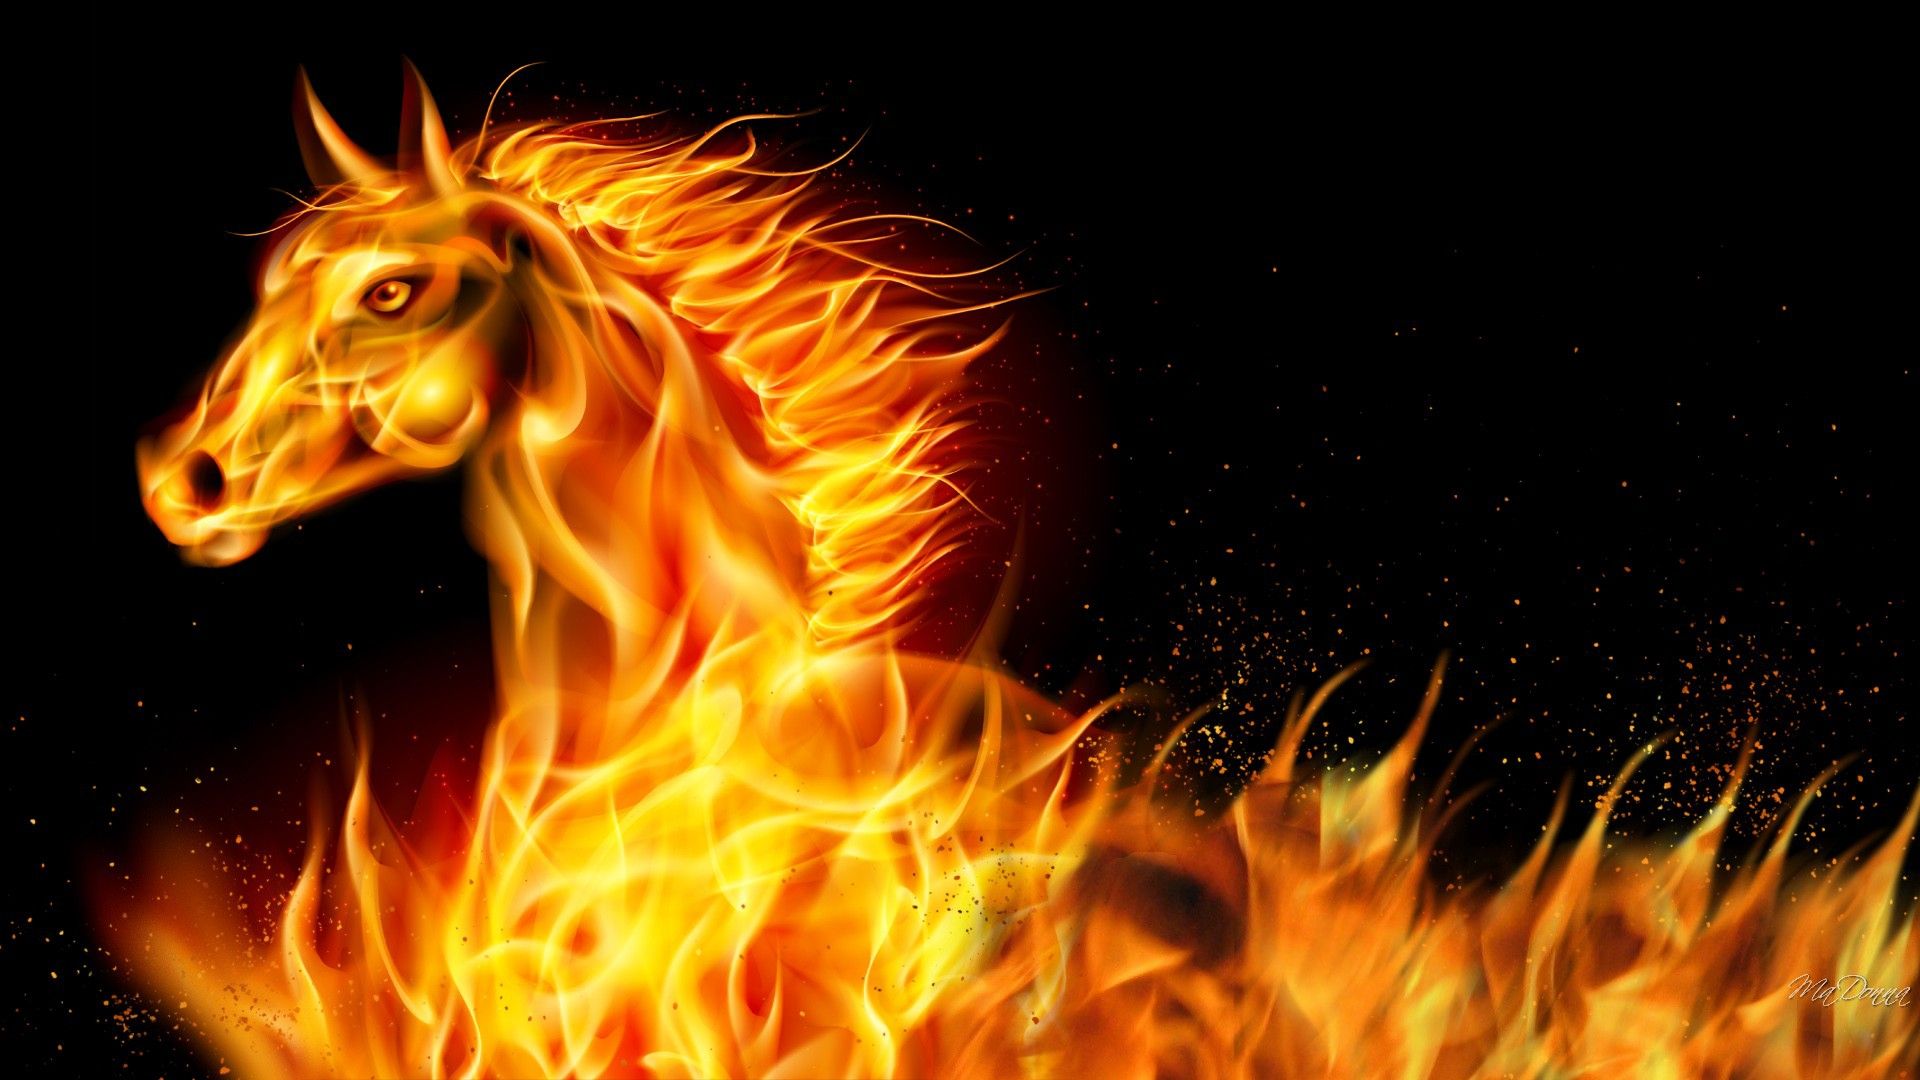 Horses Flaming Horse Flames Year Hot 2014 Abstract New Bright Free ...